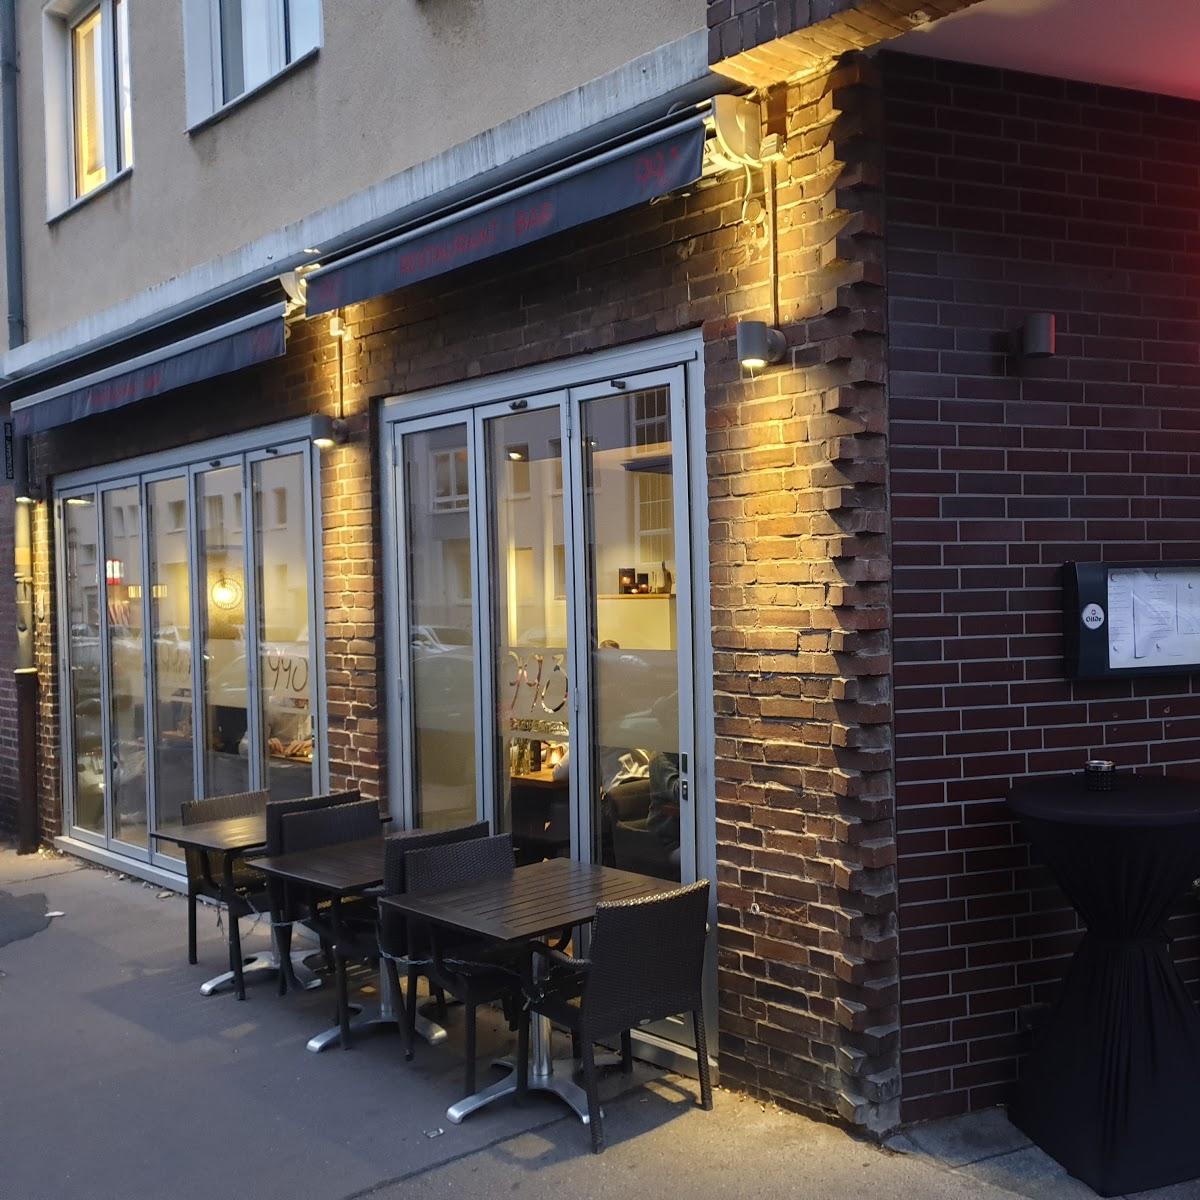 Restaurant "993 Restaurant & Bar" in  Hannover